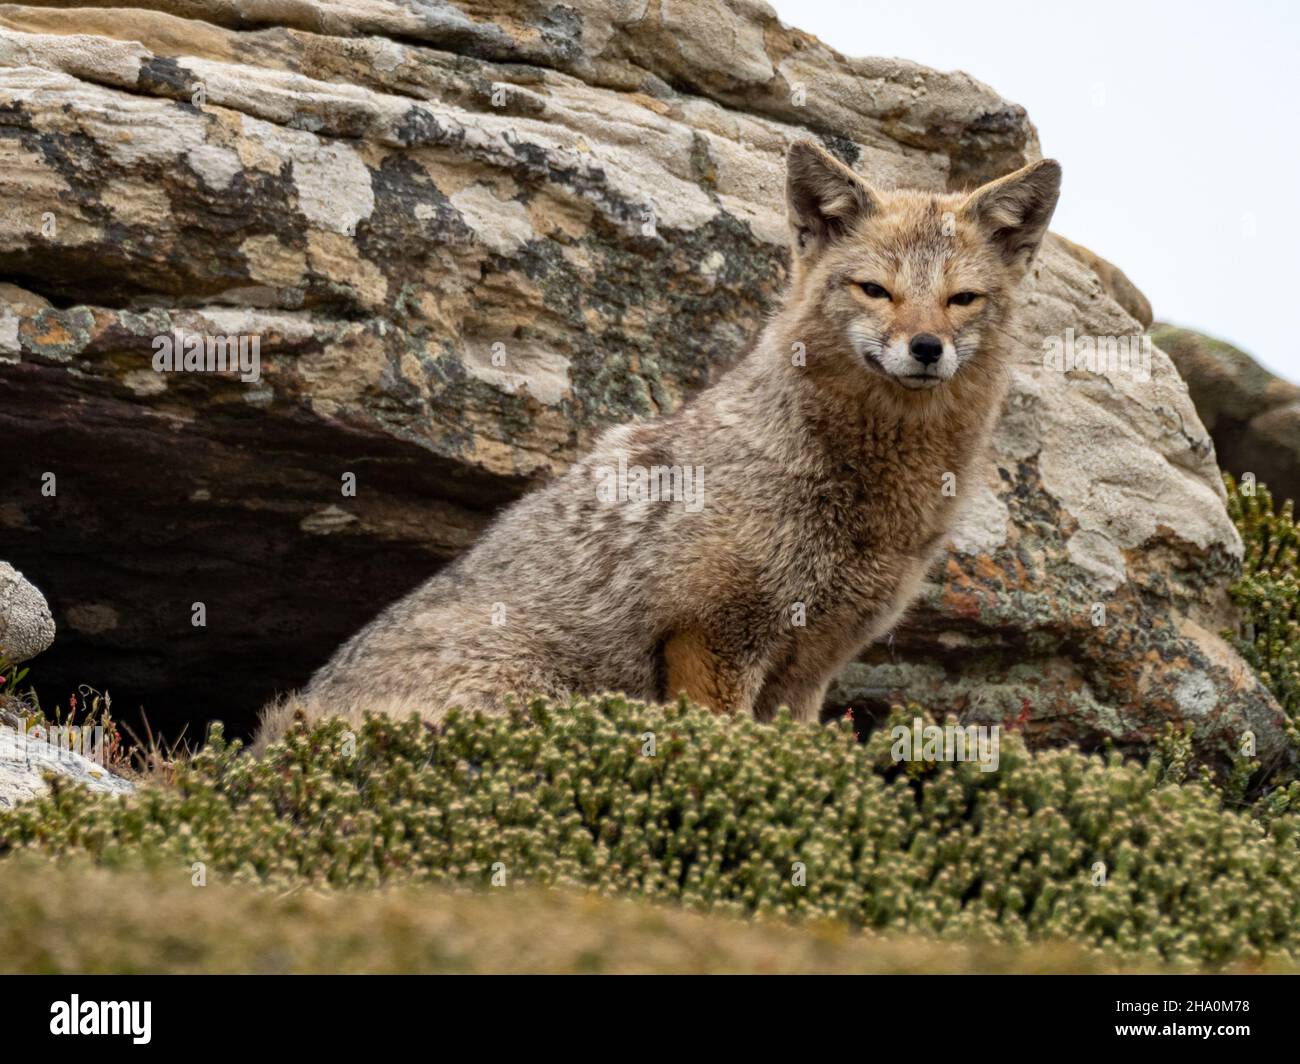 South American gray fox, Lycalopex griseus, an introduced predator on Beaver Island, Falklands Stock Photo